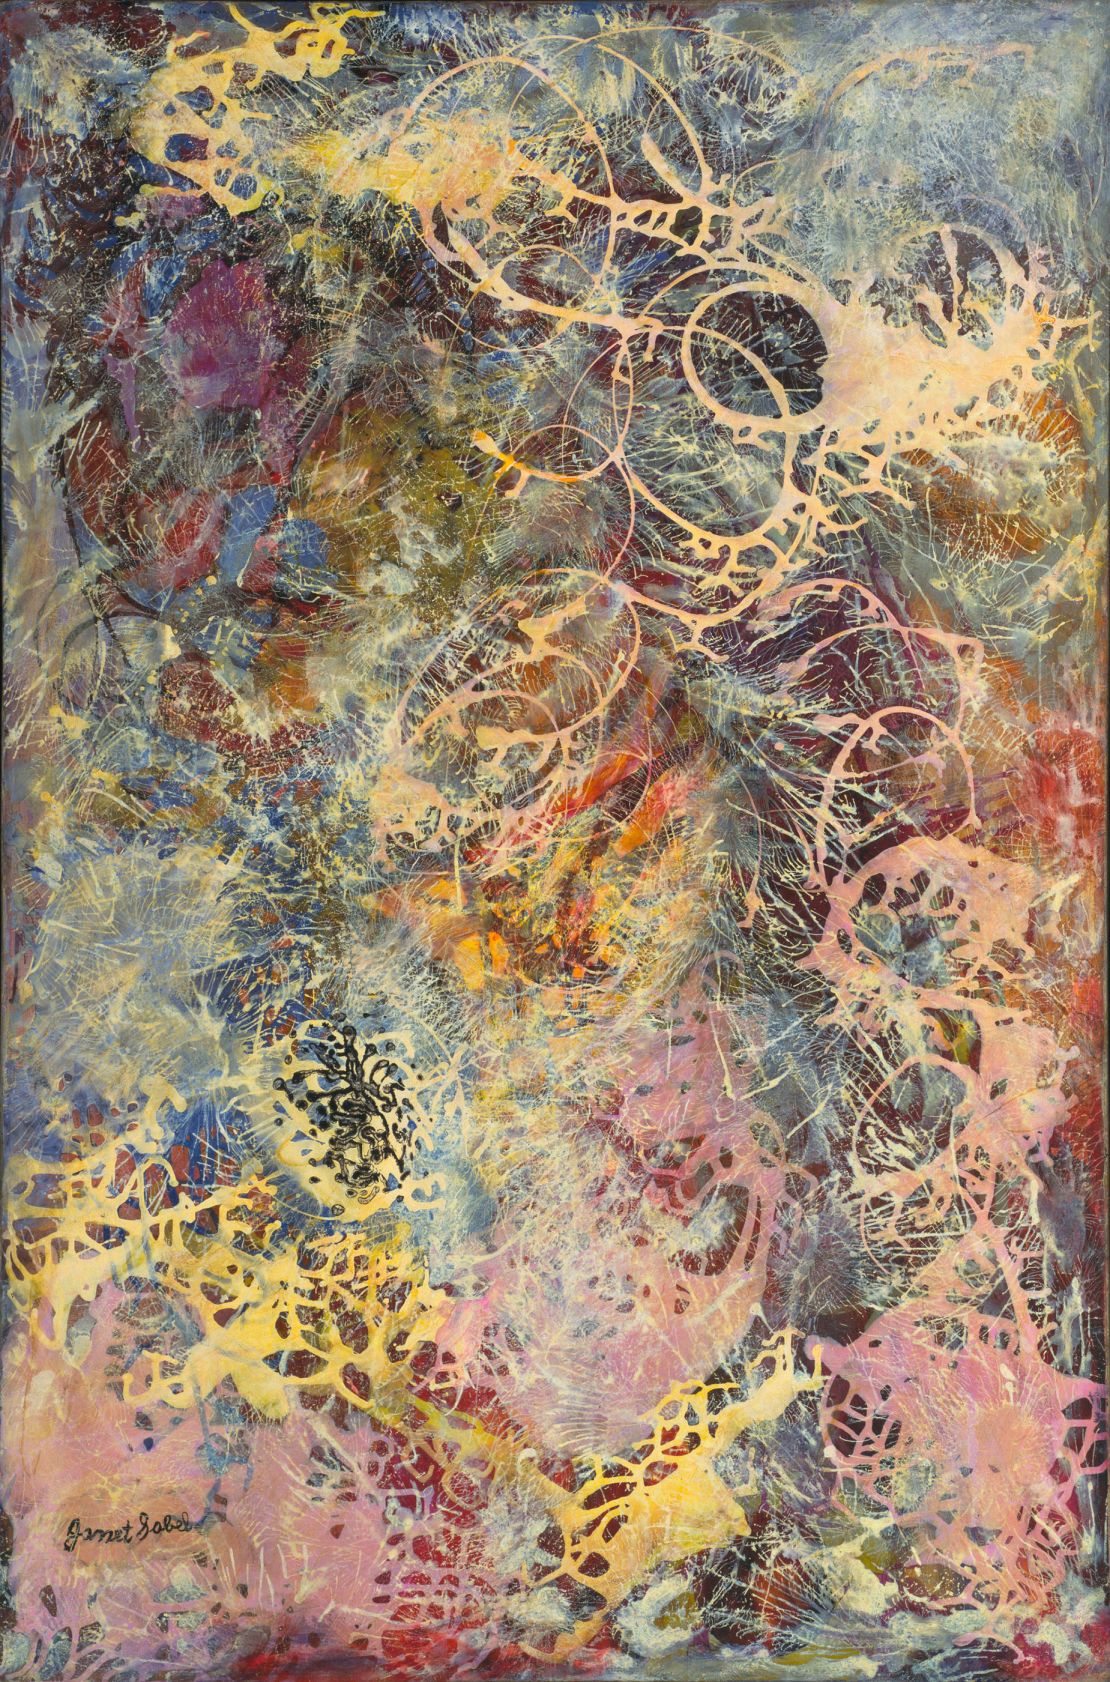 Sobel's dazzlingly frenetic work "Milky Way," painted in 1945.